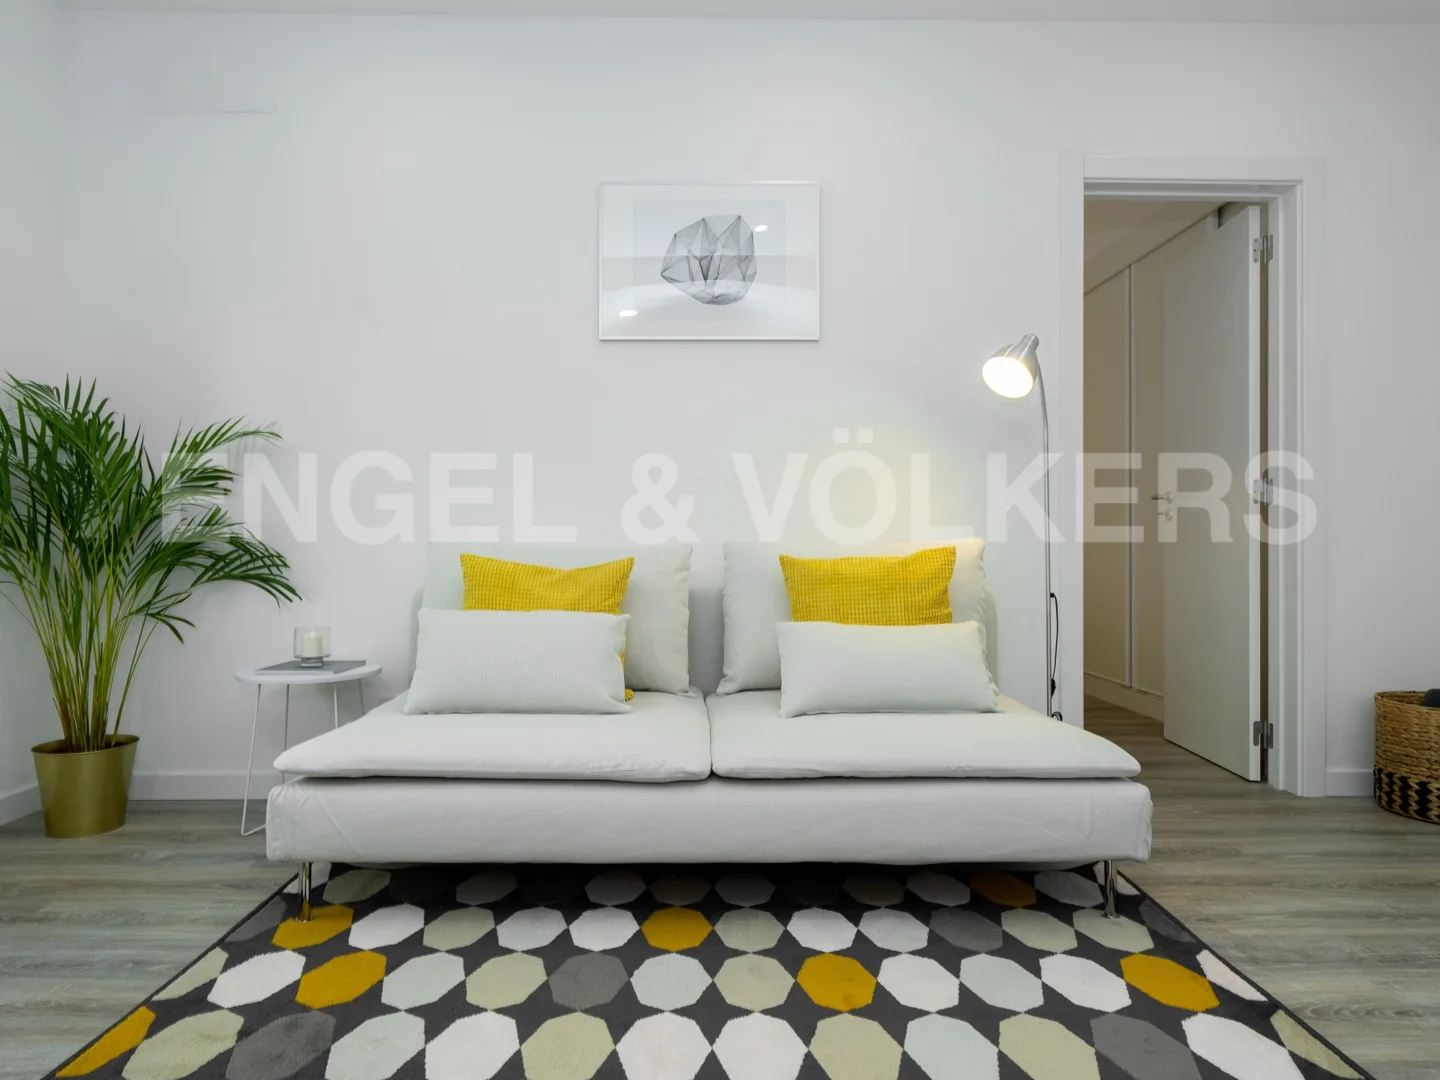 1+1 bedroom apartment with patio in São Domingos de Benfica